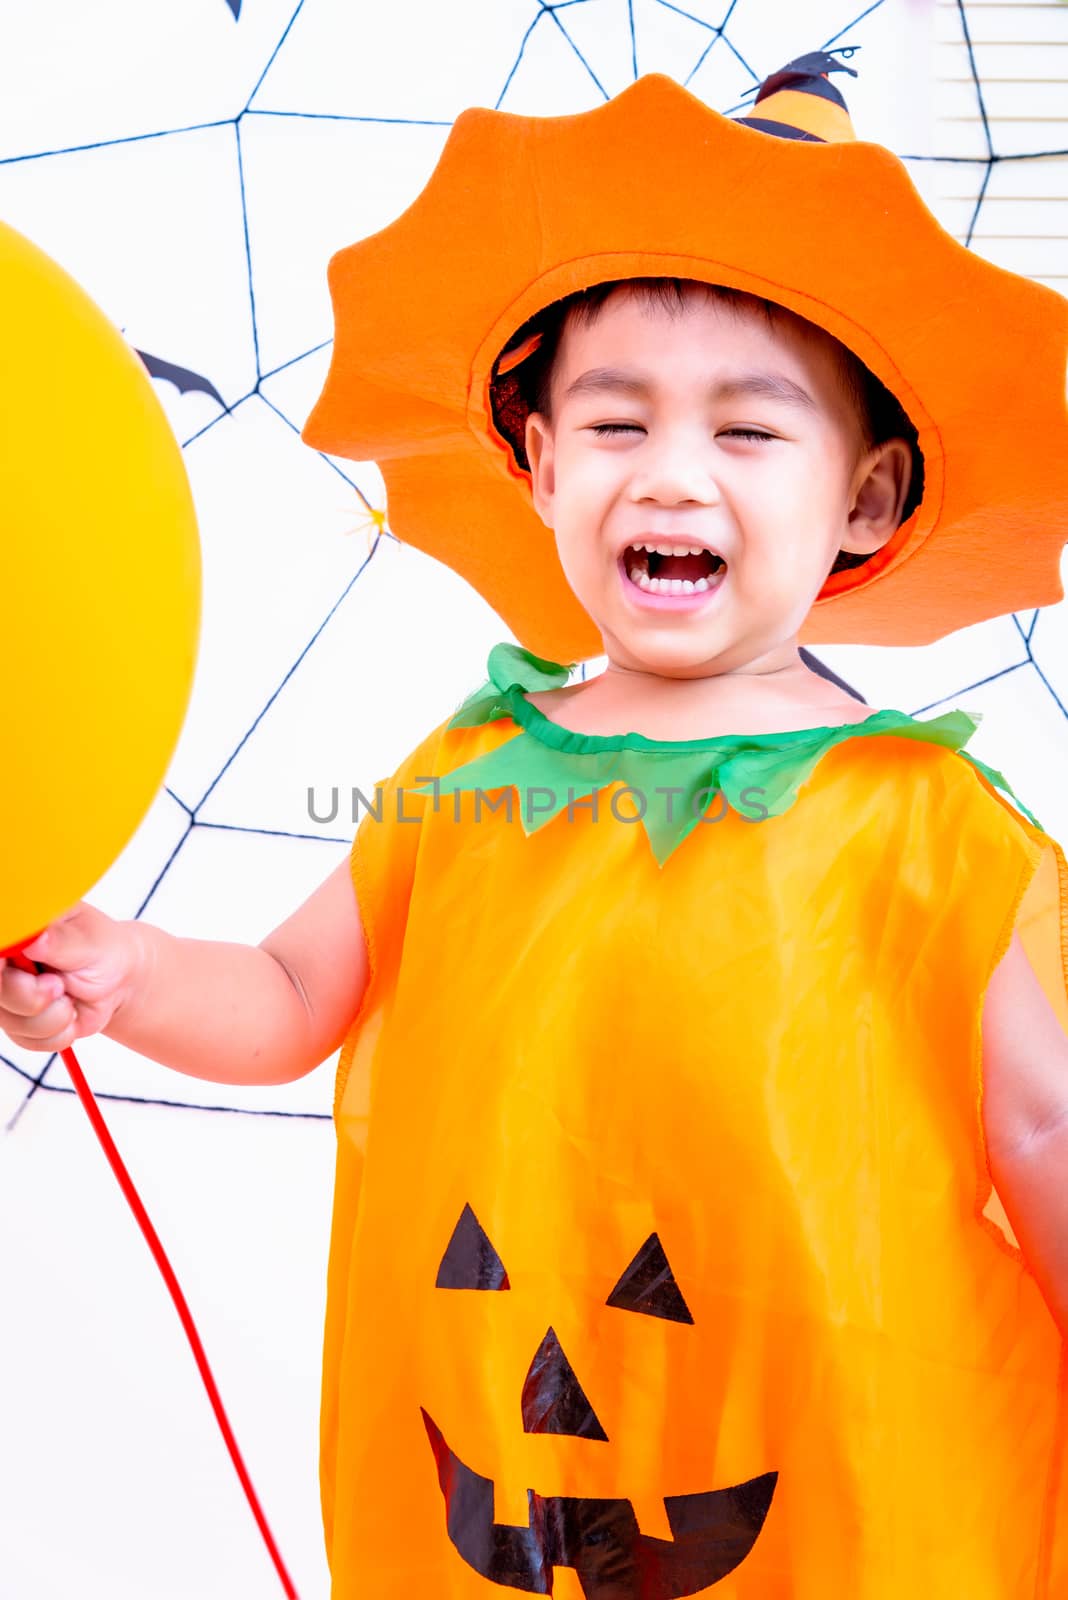 Funny kid horror costume pumpkin halloween dress he balloon on h by Sorapop